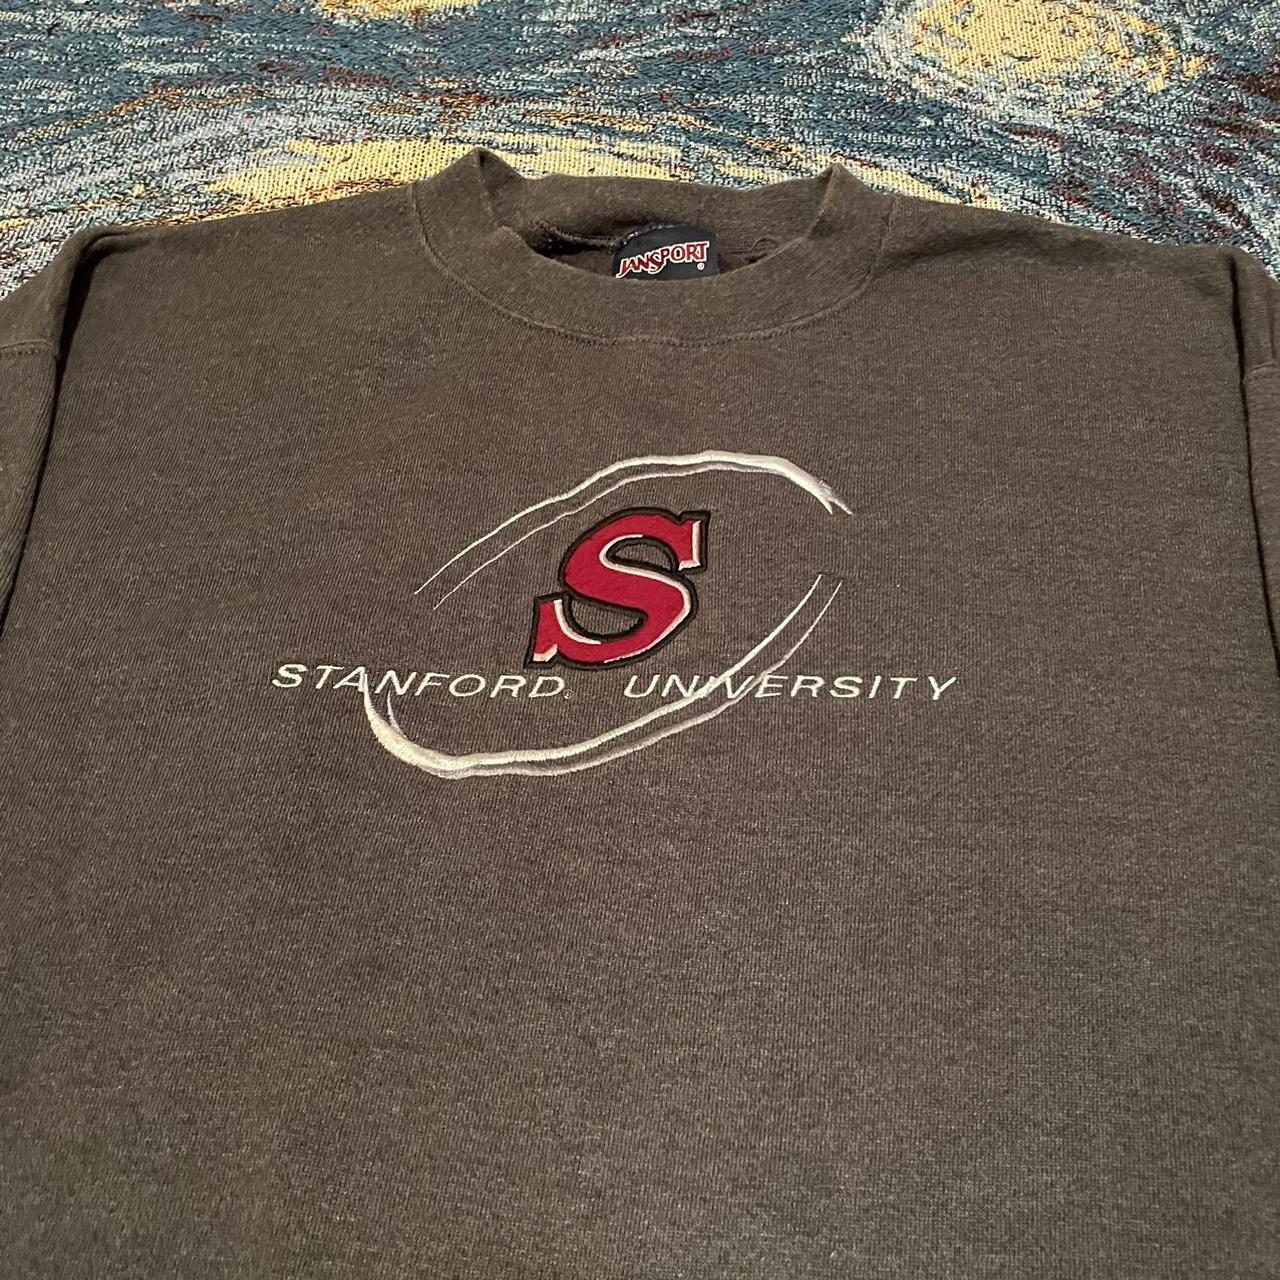 Vintage Stanford University Jansport Sweatshirt Large